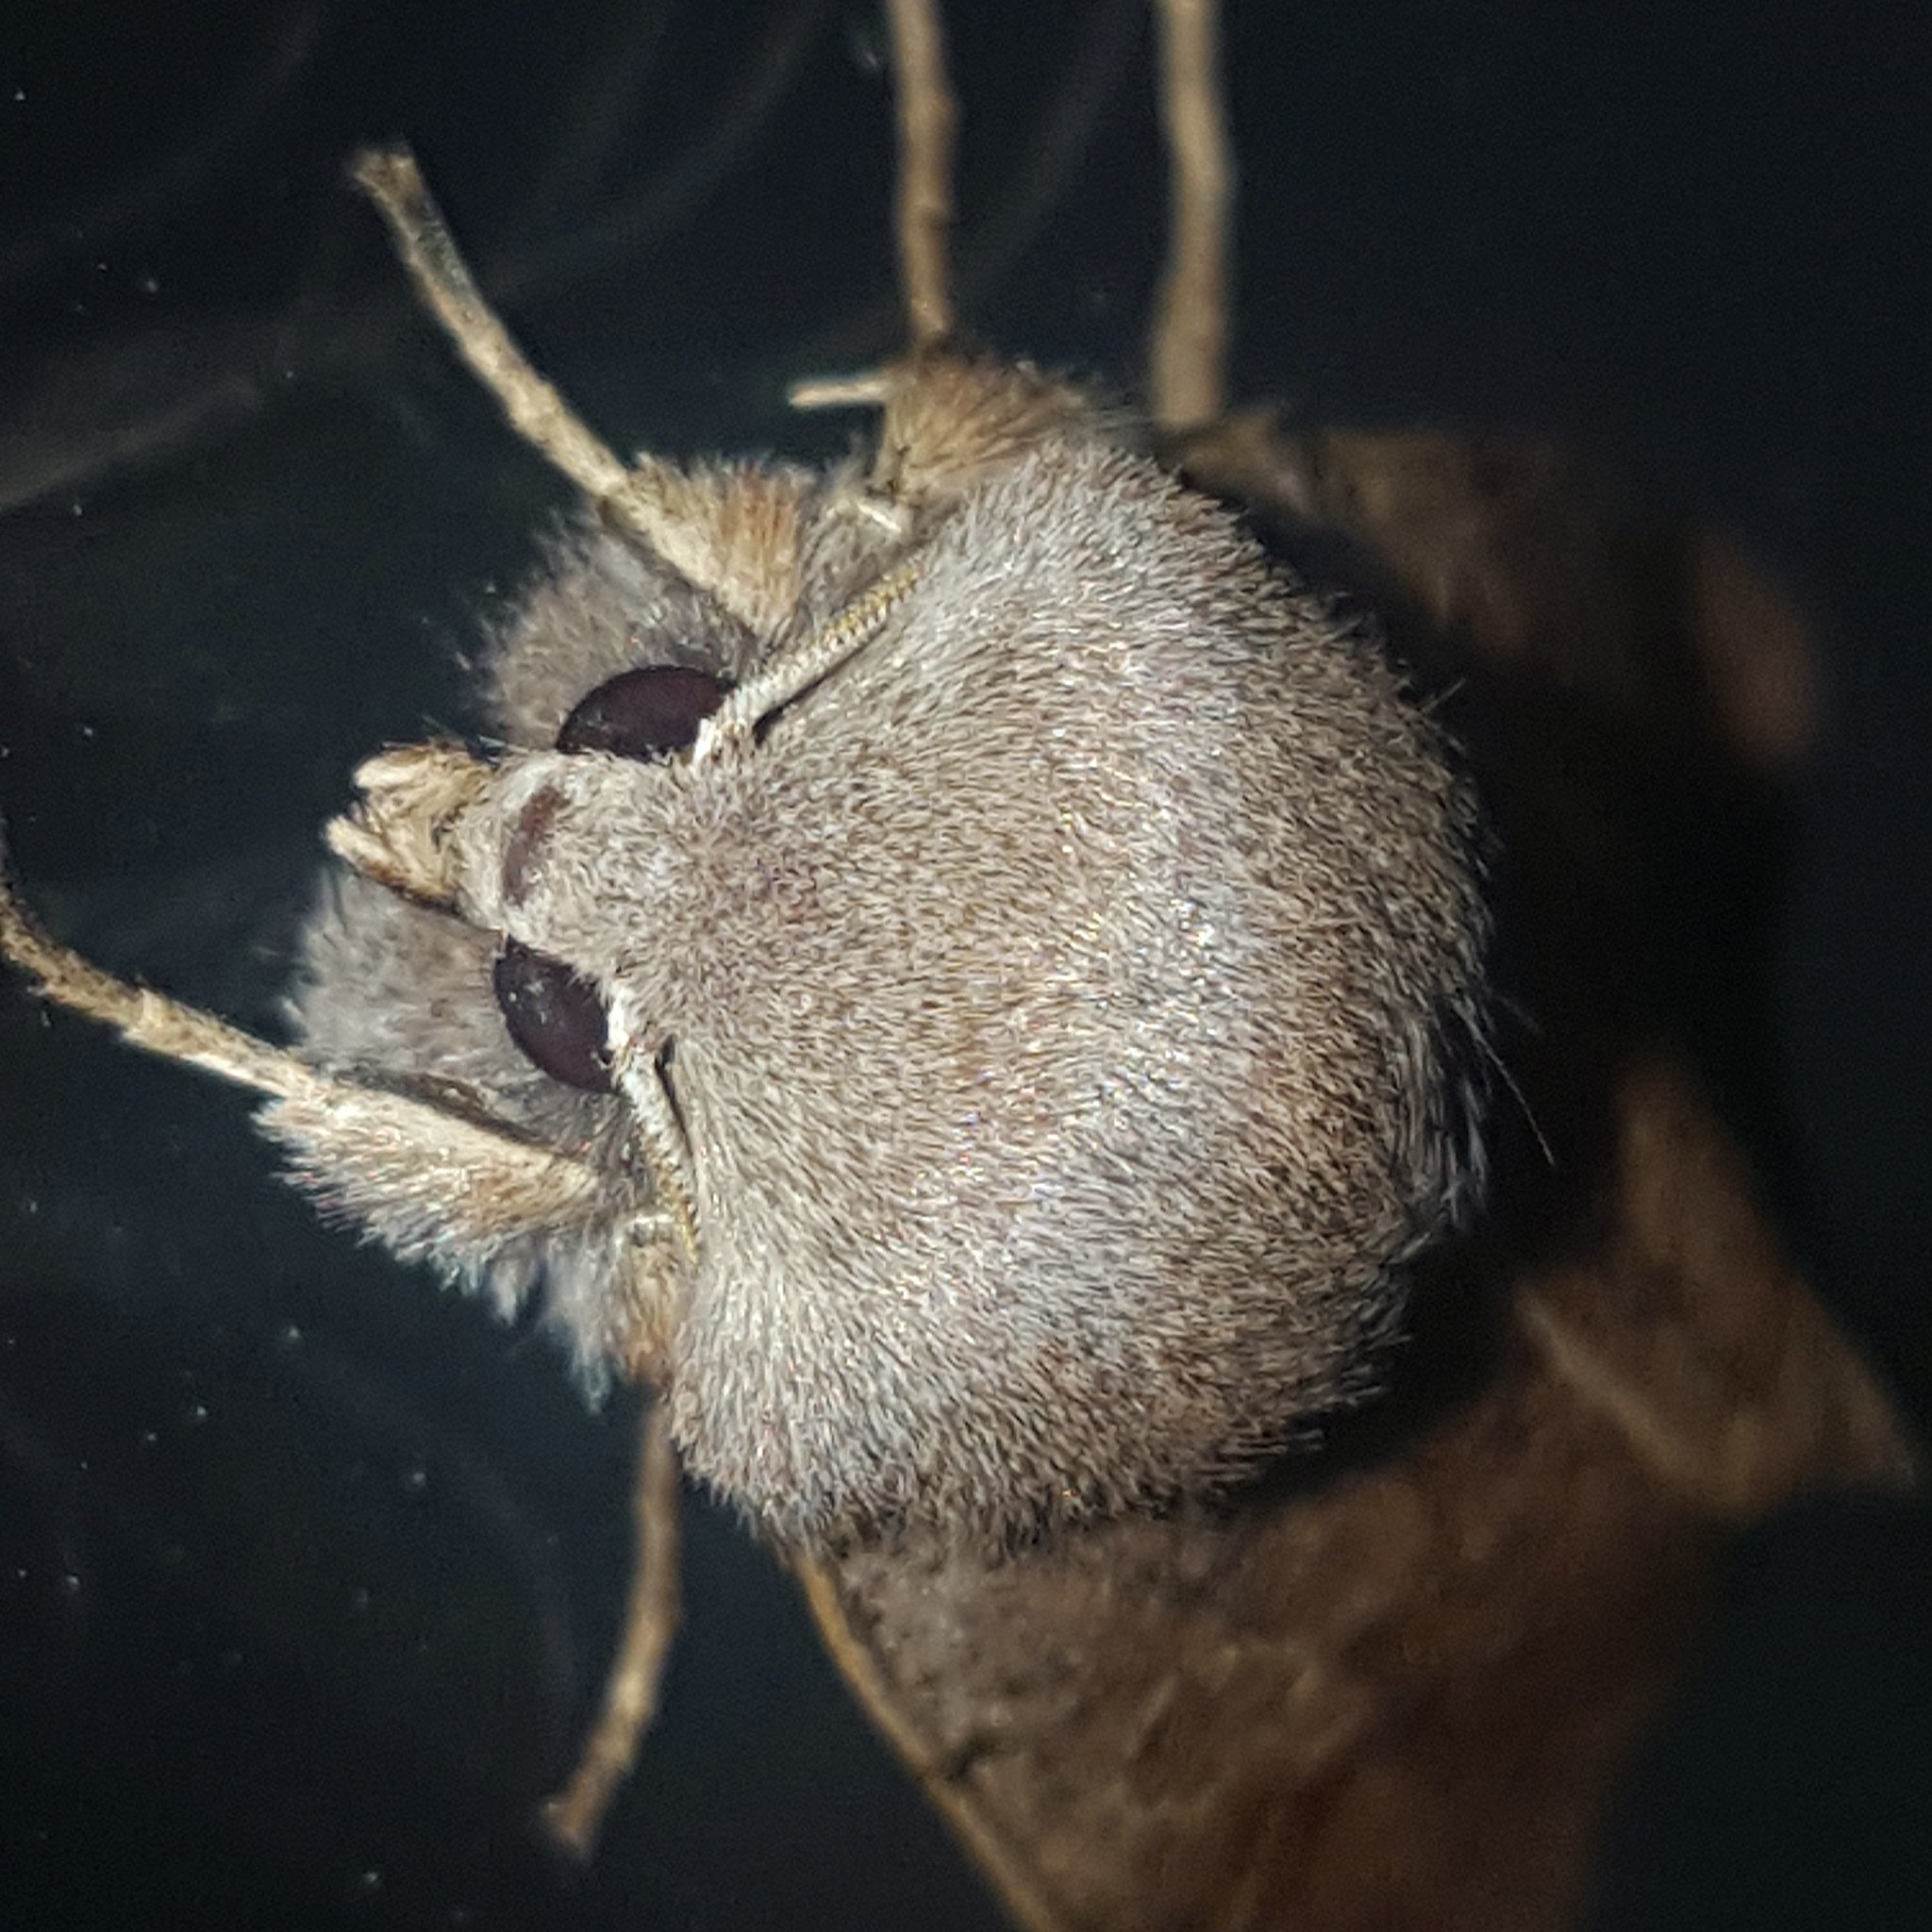 https://poulins.ca/wp/wp-content/uploads/2019/10/moth-face.jpg